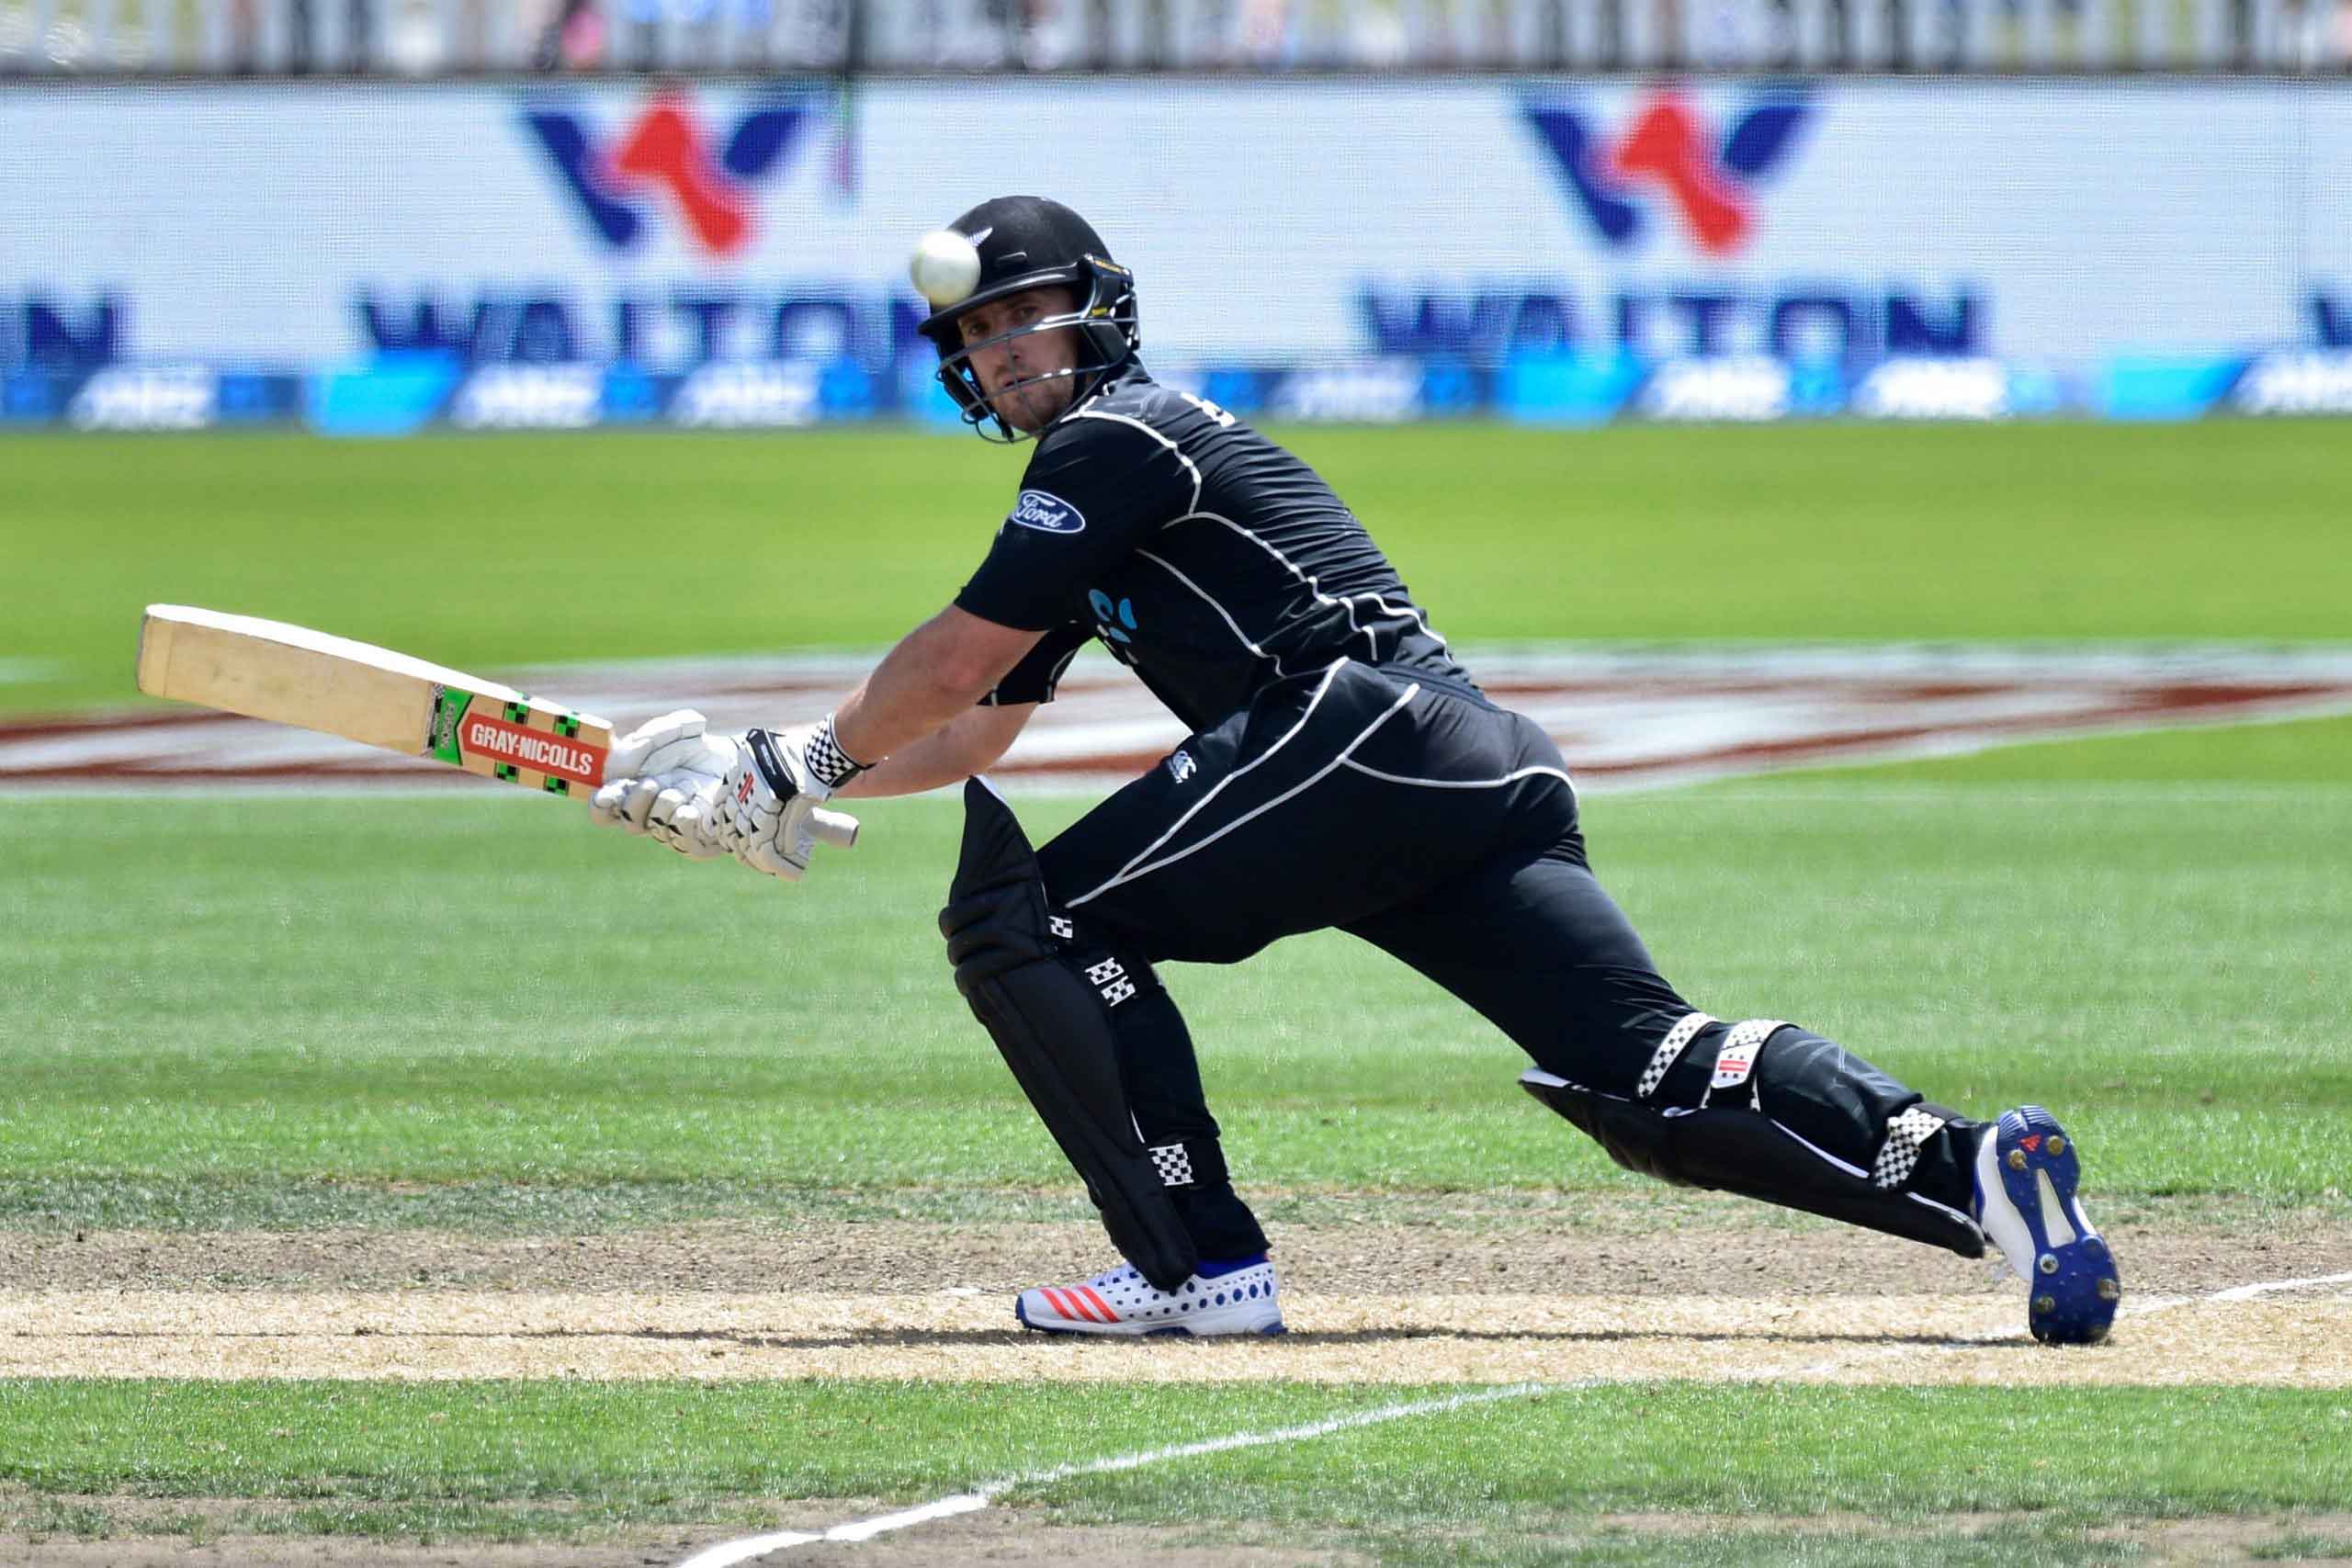 Broom hundred sets up New Zealand series win